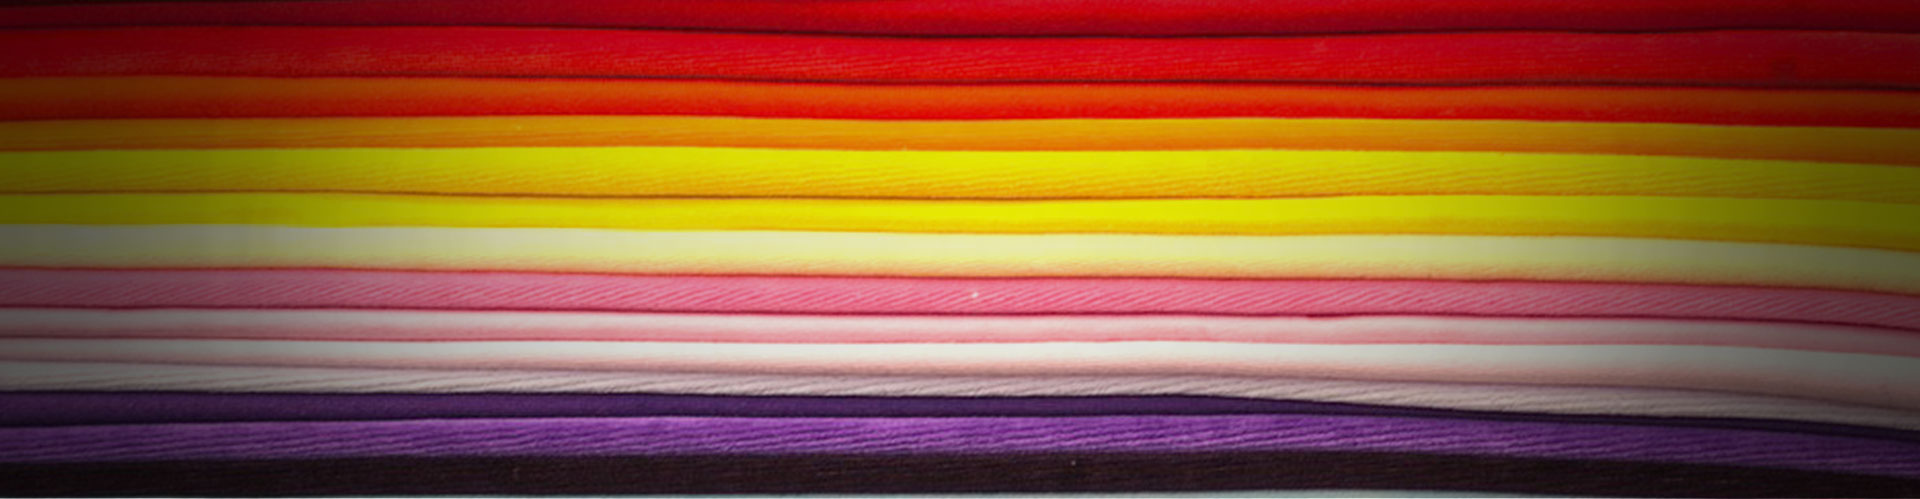 Textile Dyes Manufacturer